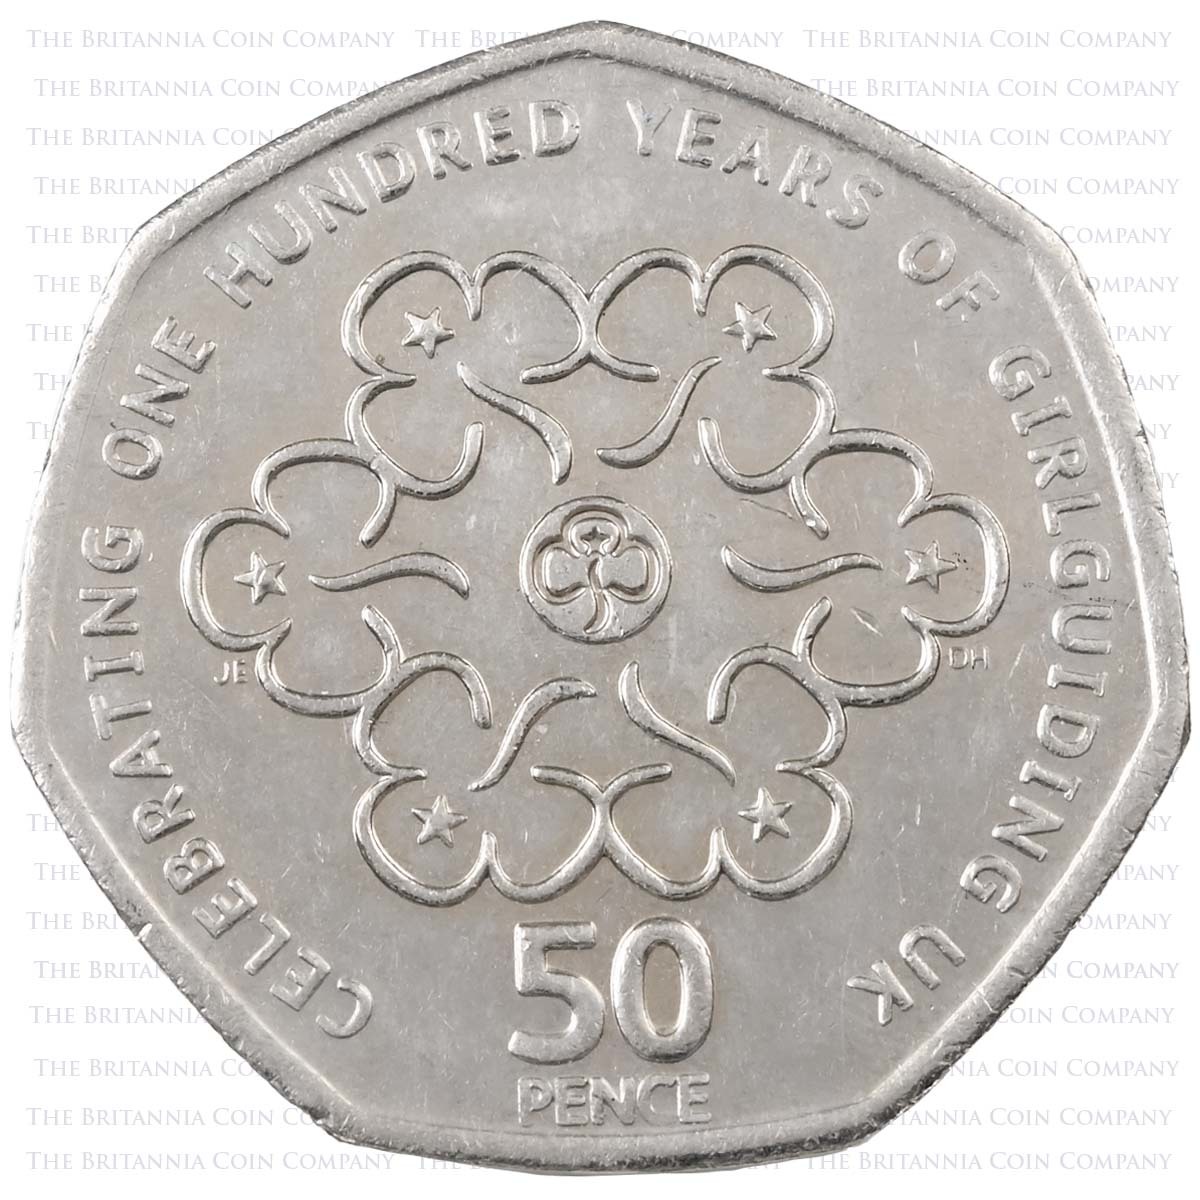 2010 Girl Guiding Circulated Fifty Pence Coin Reverse